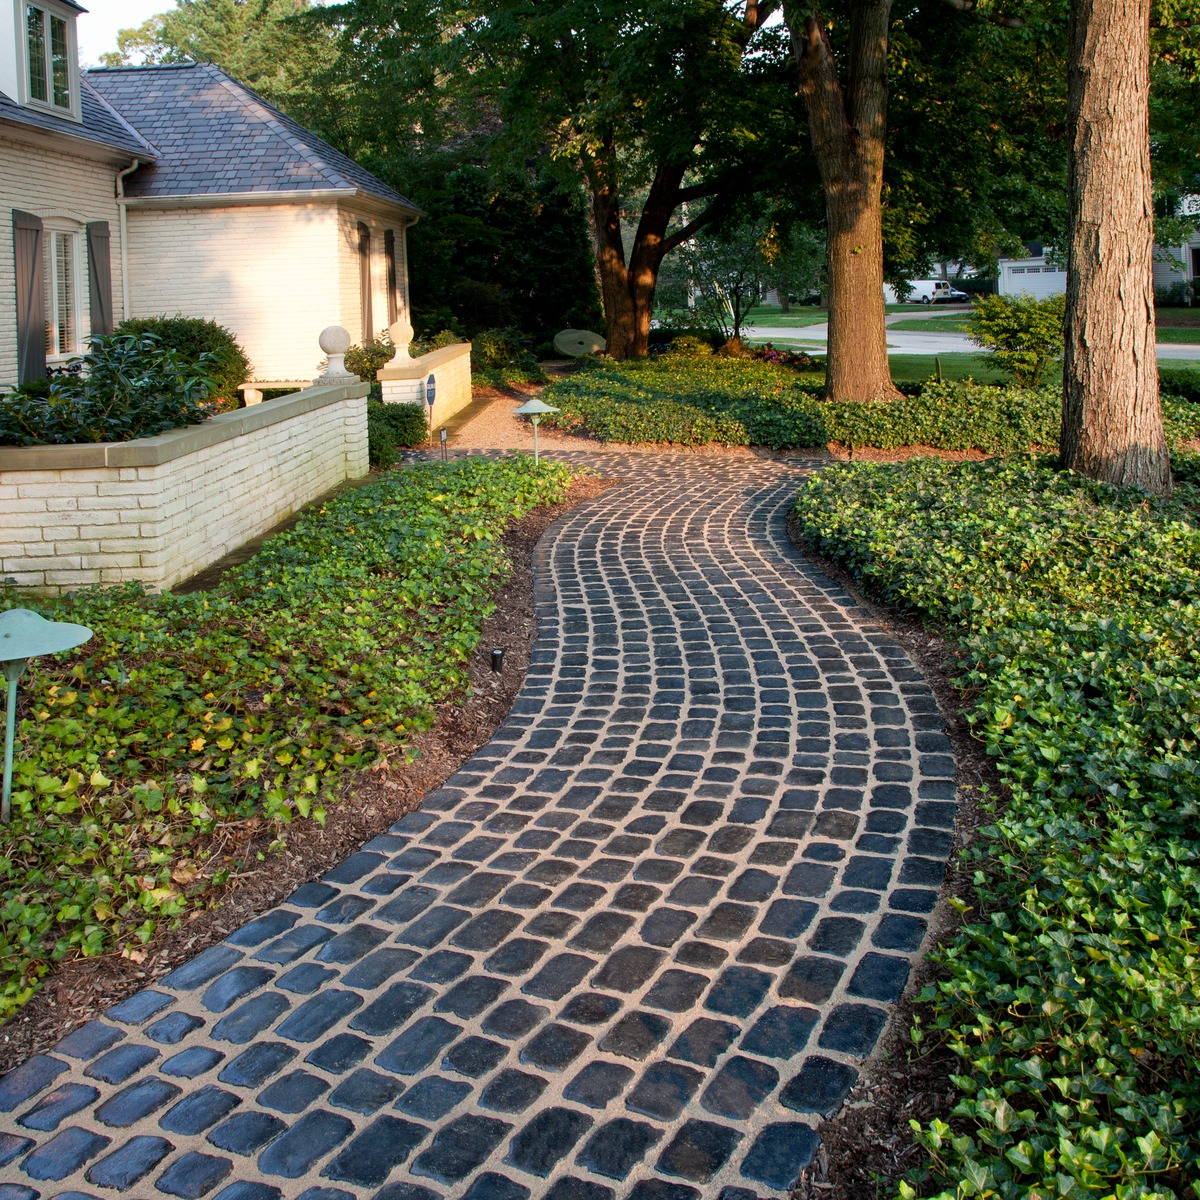 Unilock Courtstone walkway pavers in Basalt color.